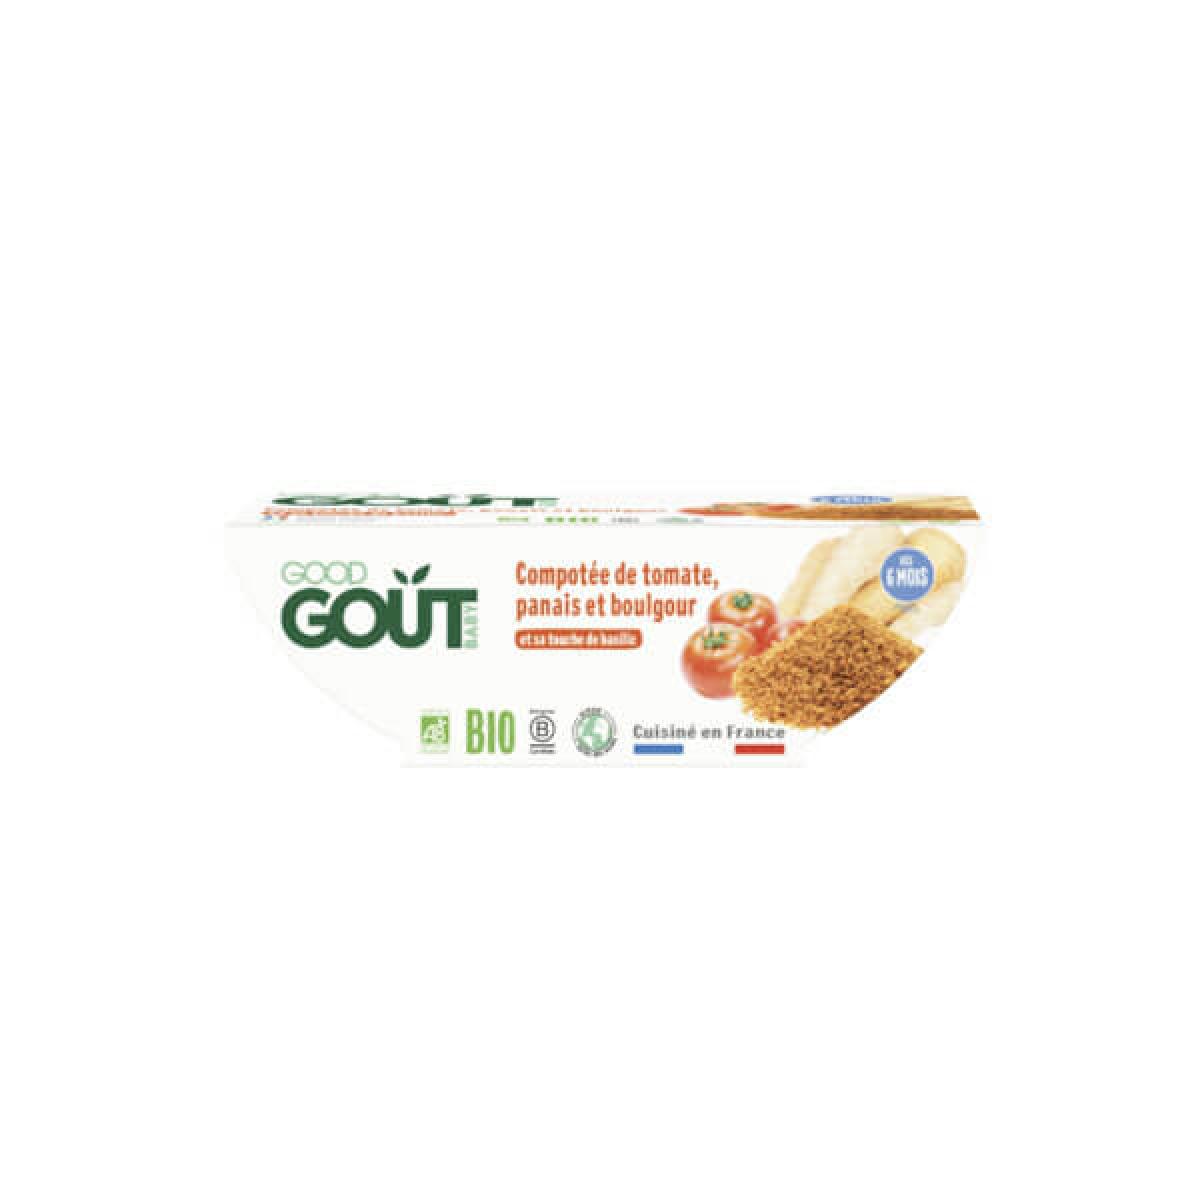 Good Gout Compotee De Tomate Panais Et Boulgour Bio 6 Mois 2 Bols 190g Parapharmacie Pharmarket